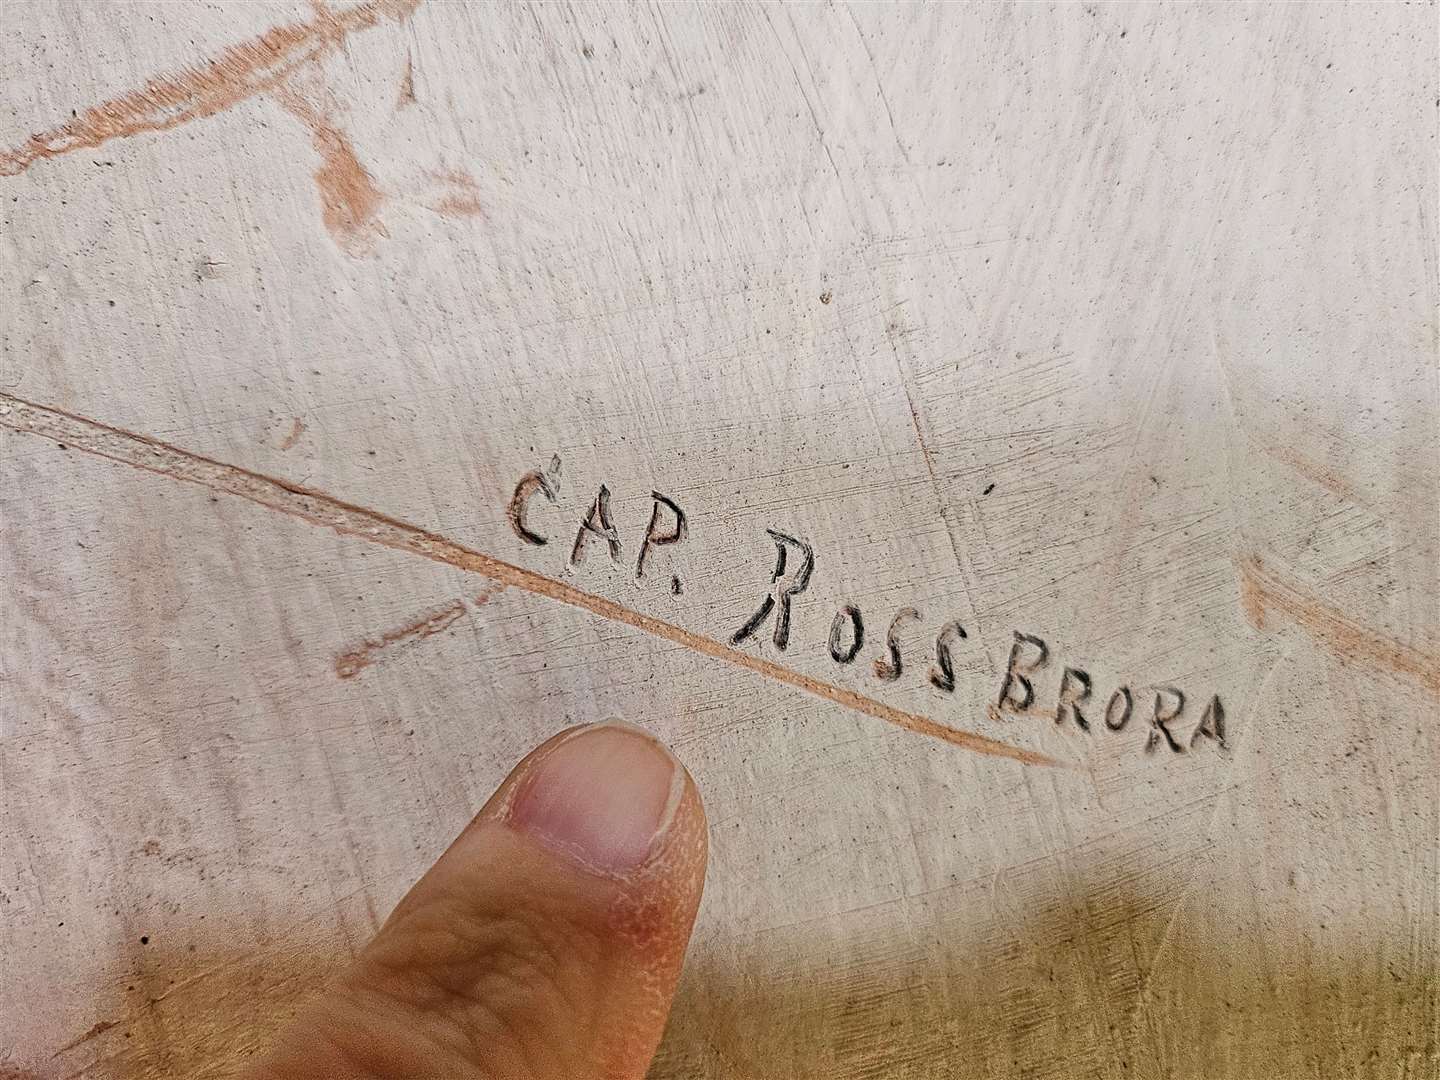 Plasterwork was found with the words ‘Cap. Ross Brora’ written on it.